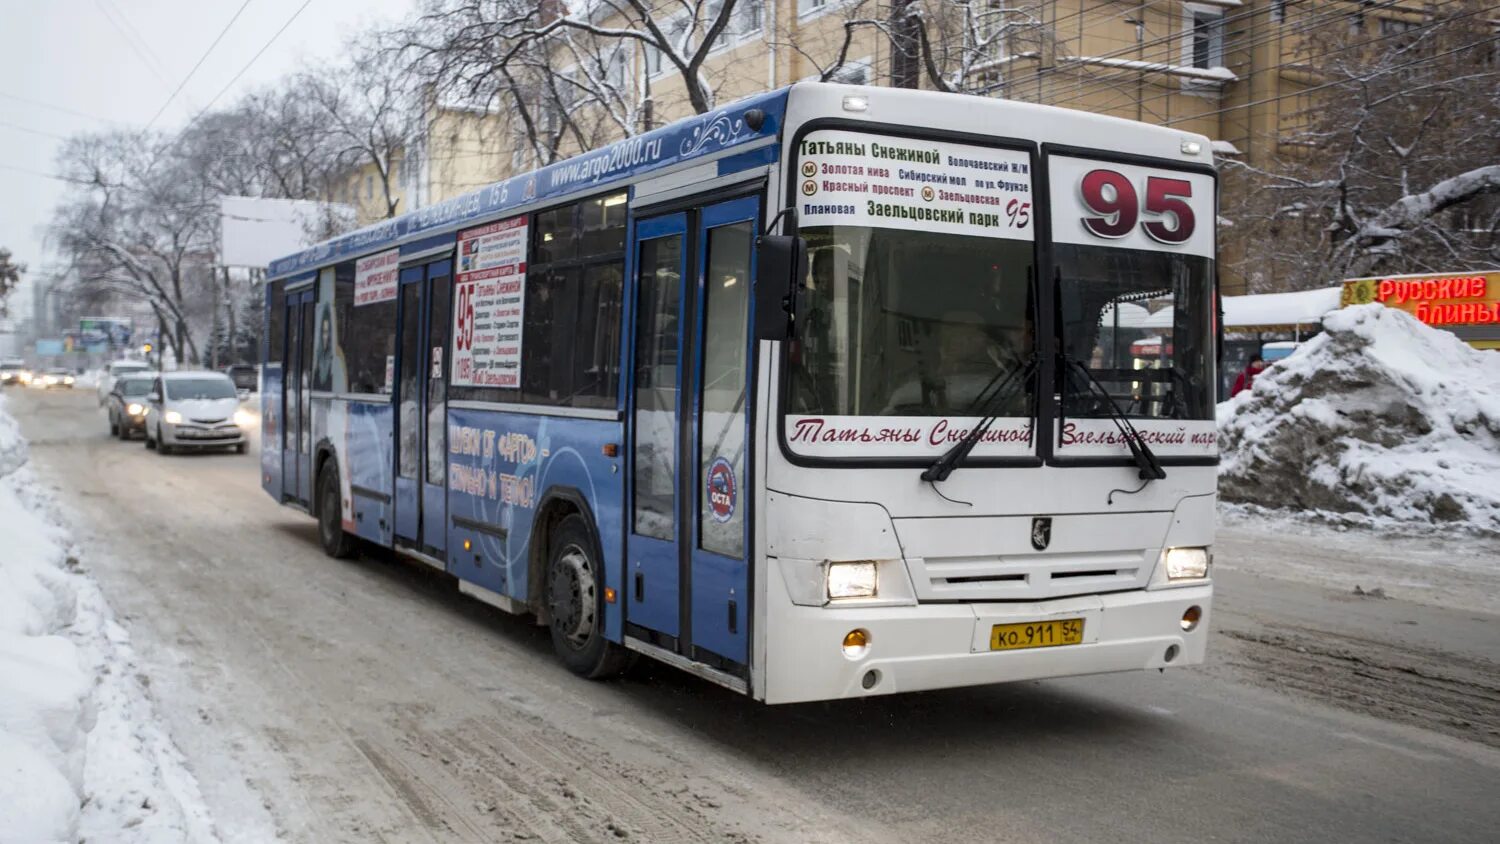 Транспорт новосибирск автобус. Автобус Новосибирск. 14 Автобус Новосибирск. 95 Автобус Новосибирск. Автобус Новосибирск зима.